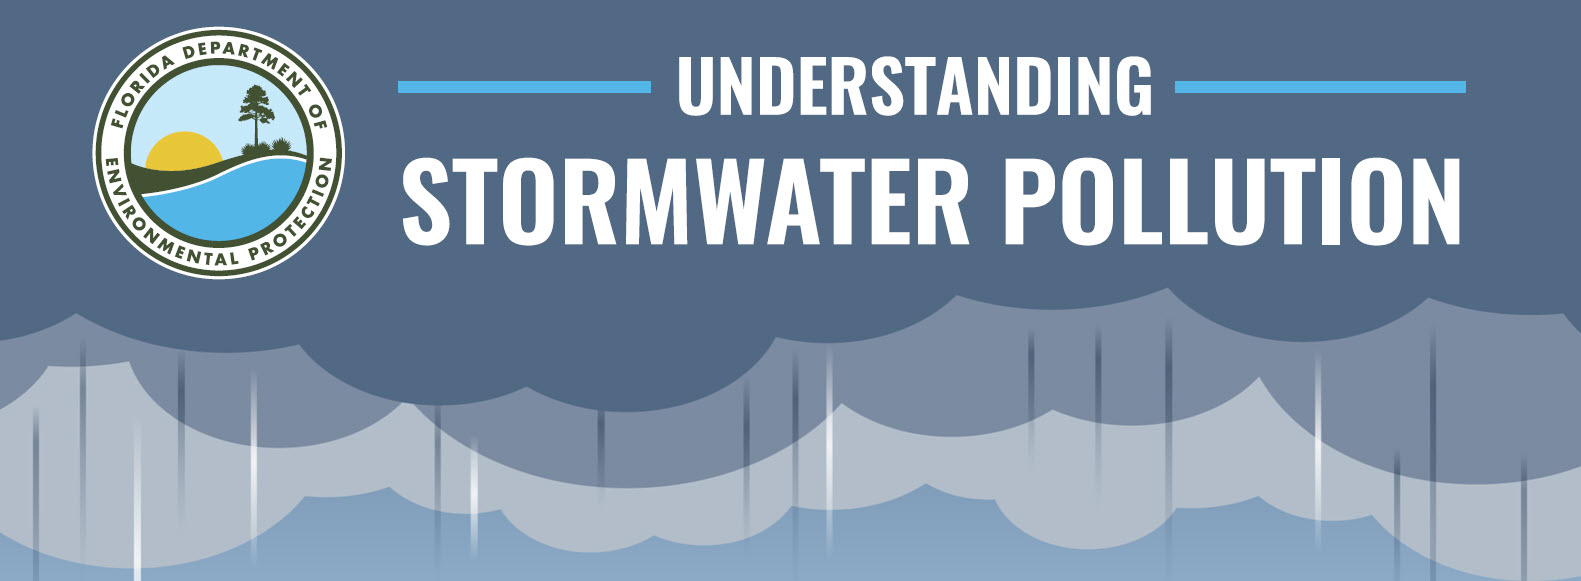 Understanding Stormwater Pollution